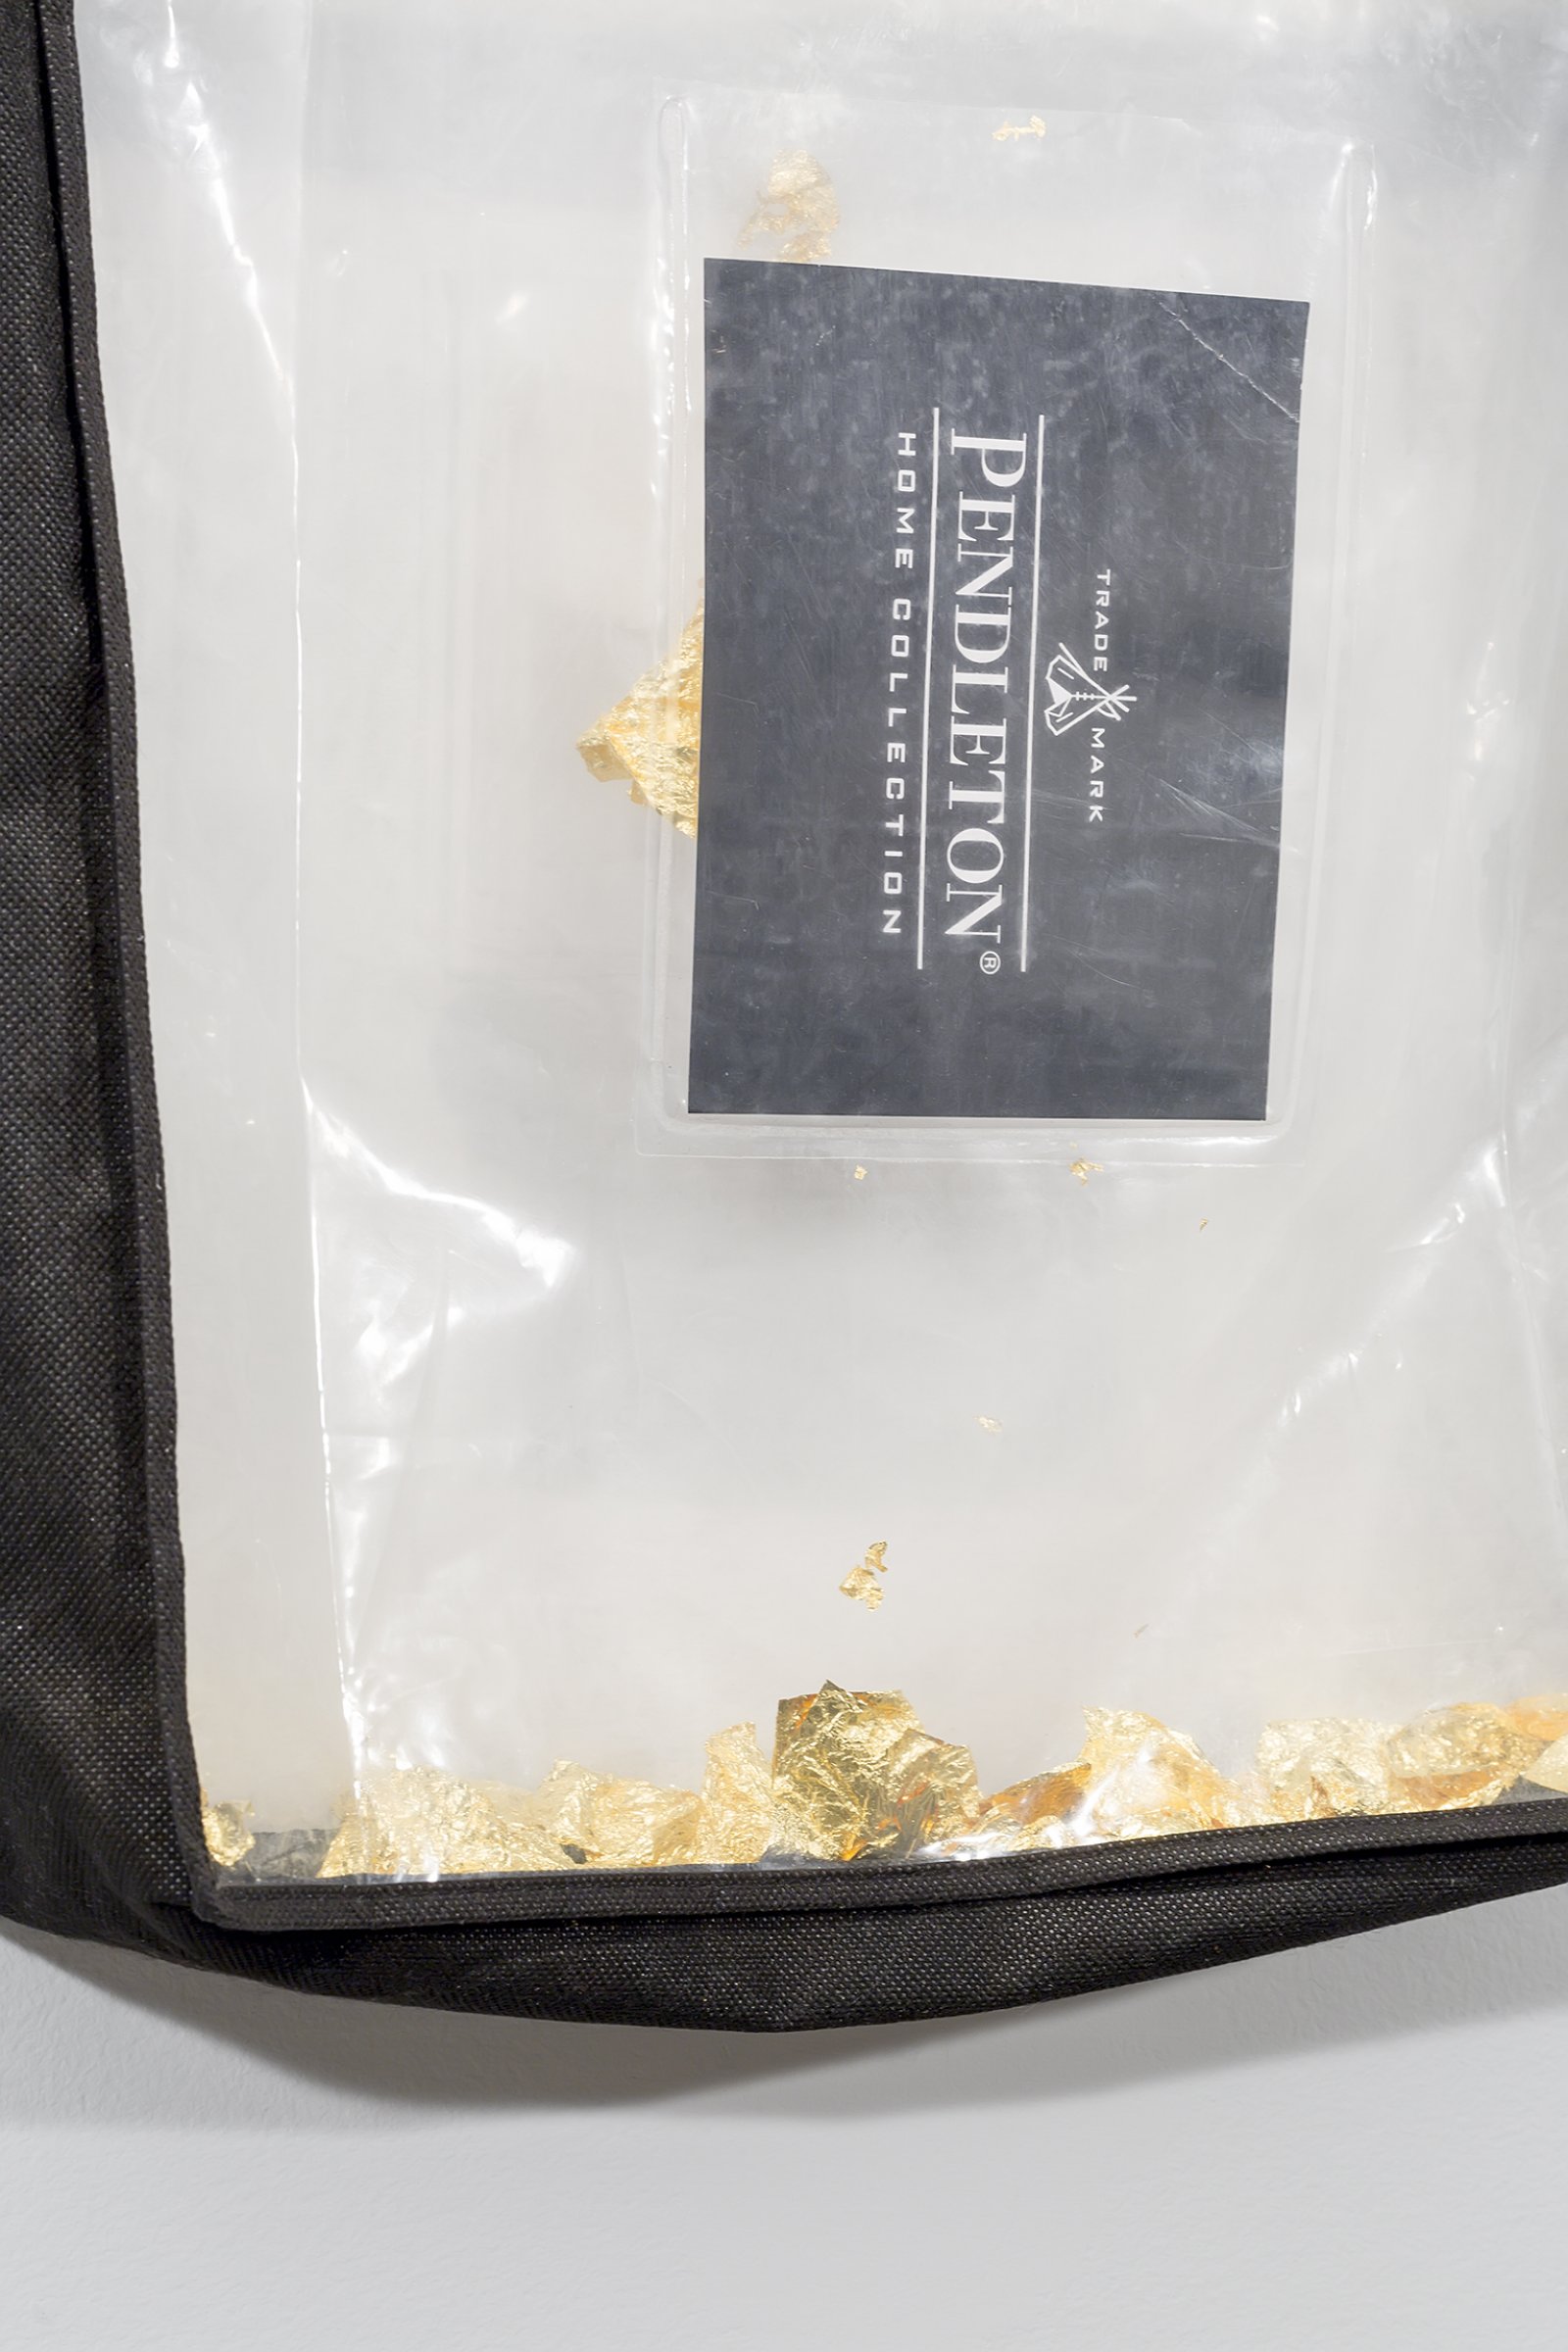 Duane Linklater, Trademark (detail), 2016, gold leaf, plastic bag, 19 x 16 x 4 in. (48 x 40 x 9 cm)